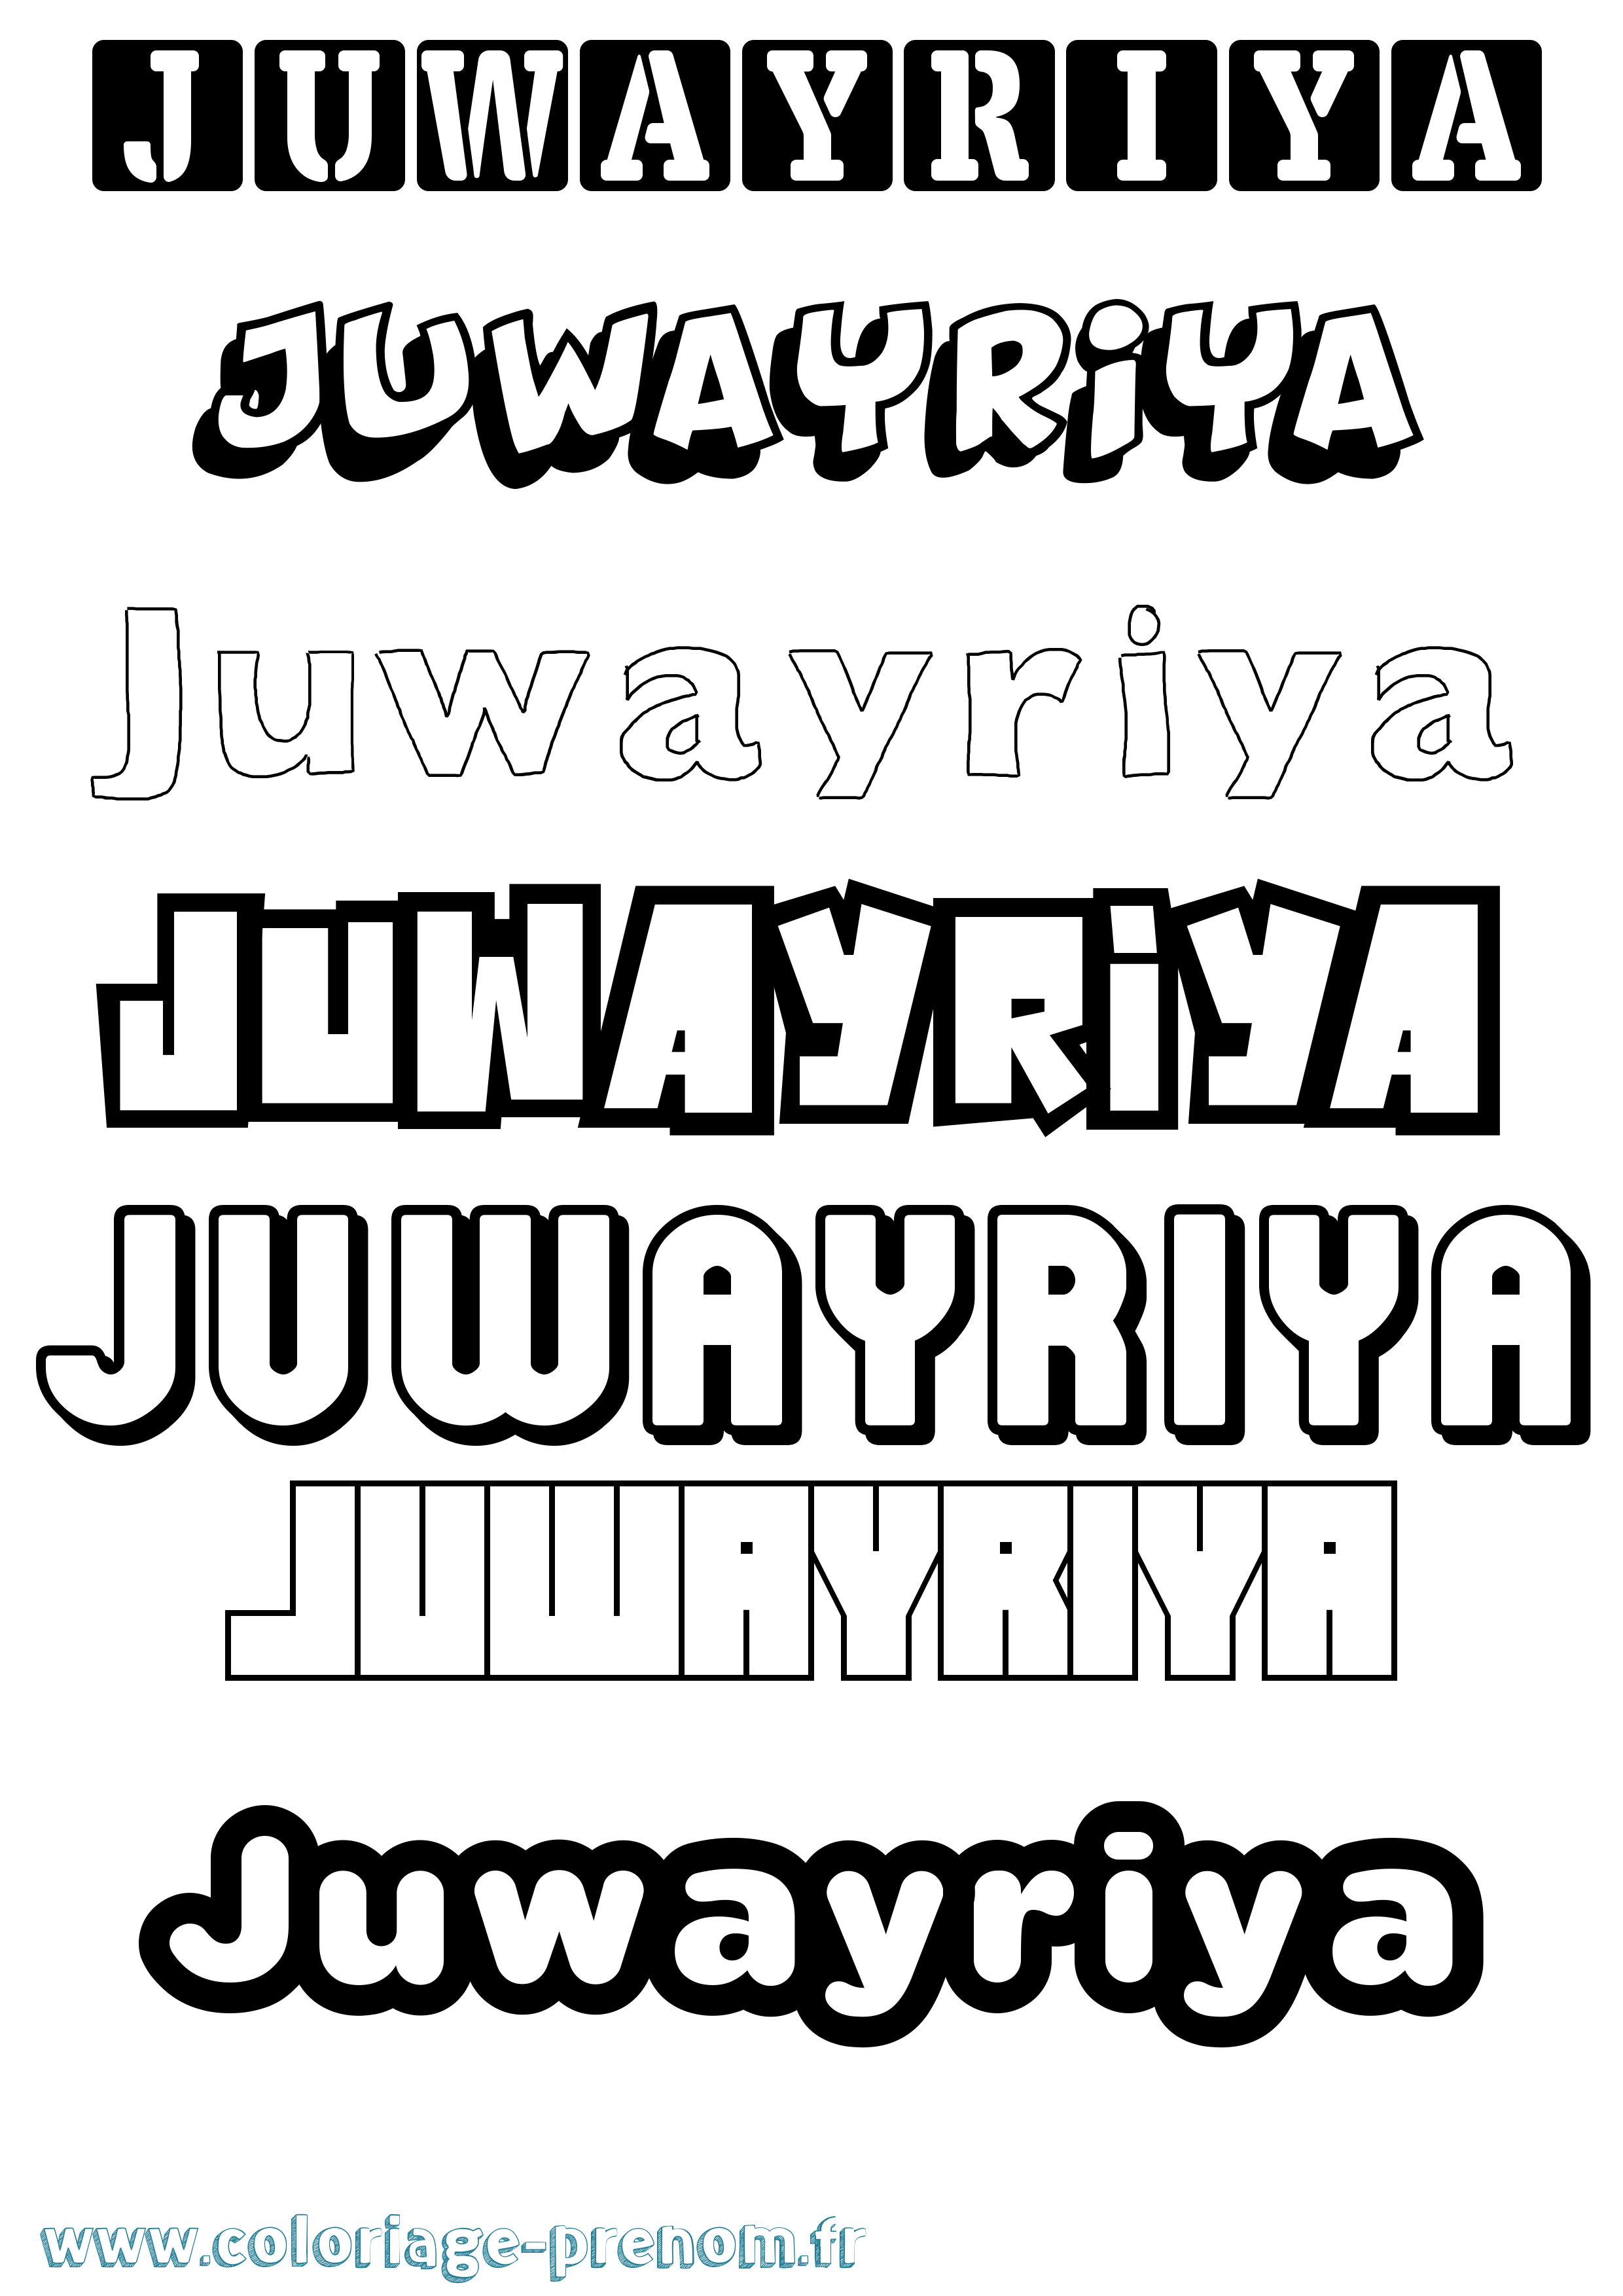 Coloriage prénom Juwayriya Simple